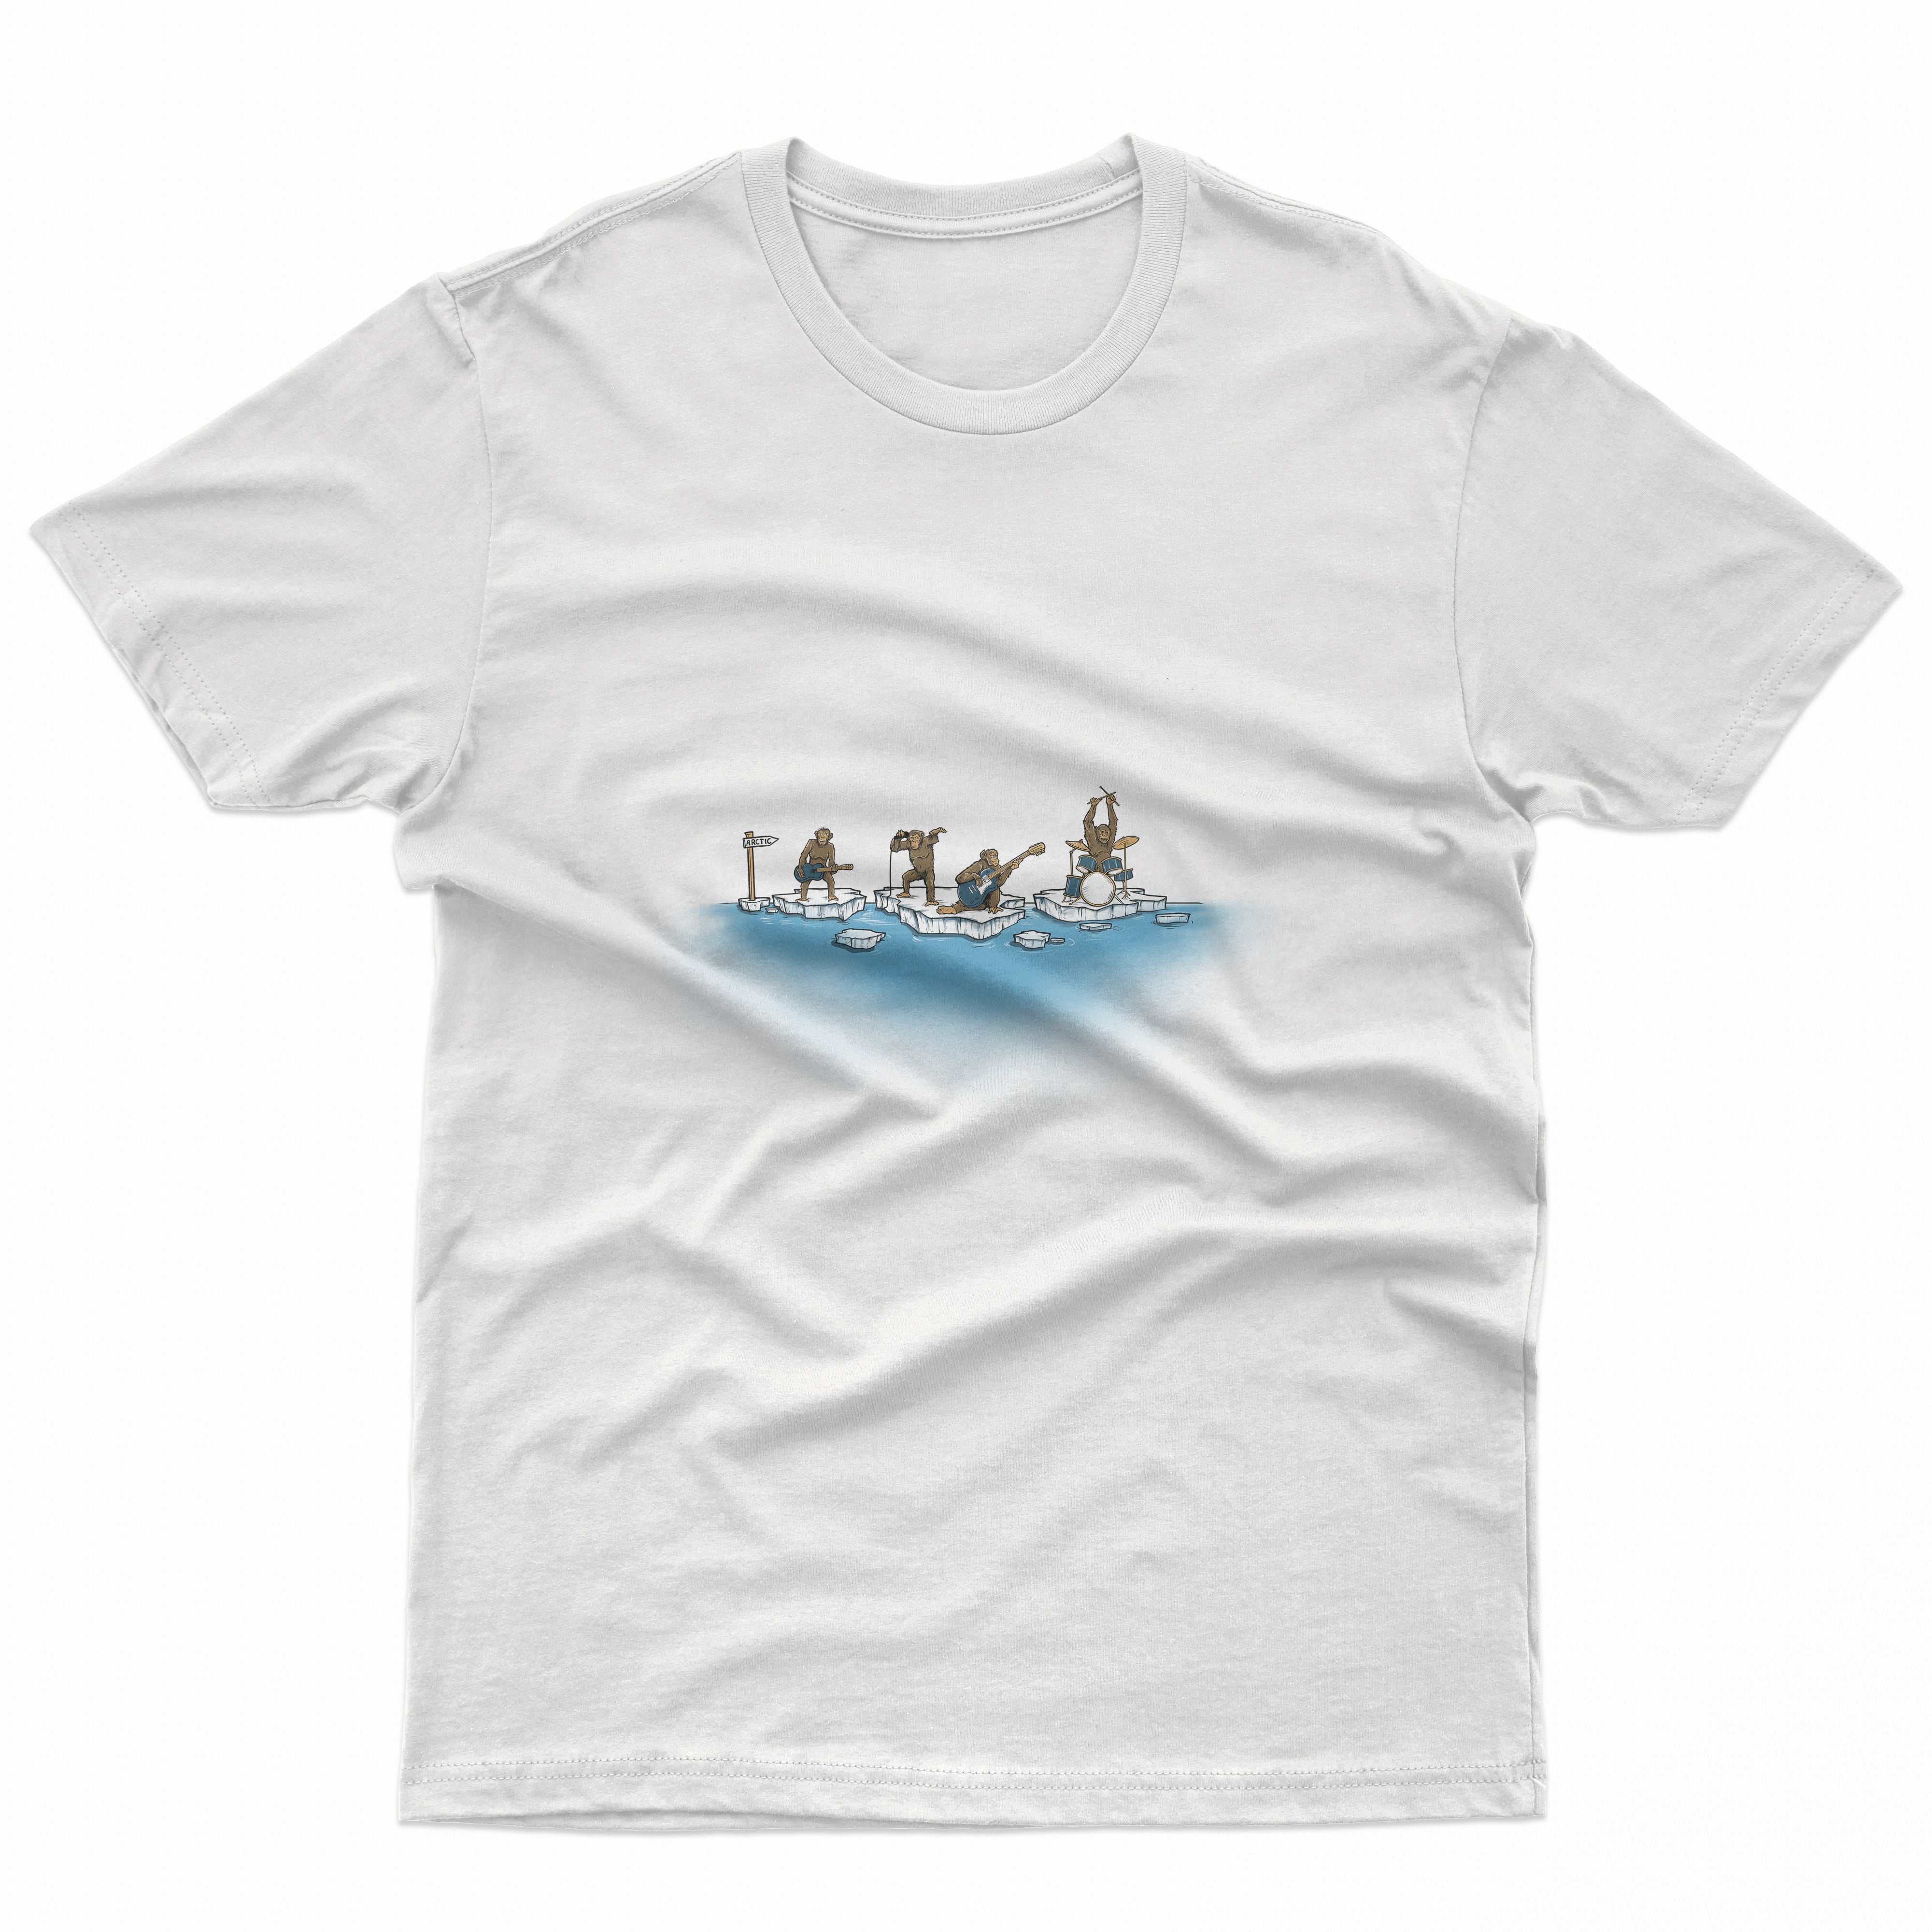 Arctic Monkey Band Kids T Shirt